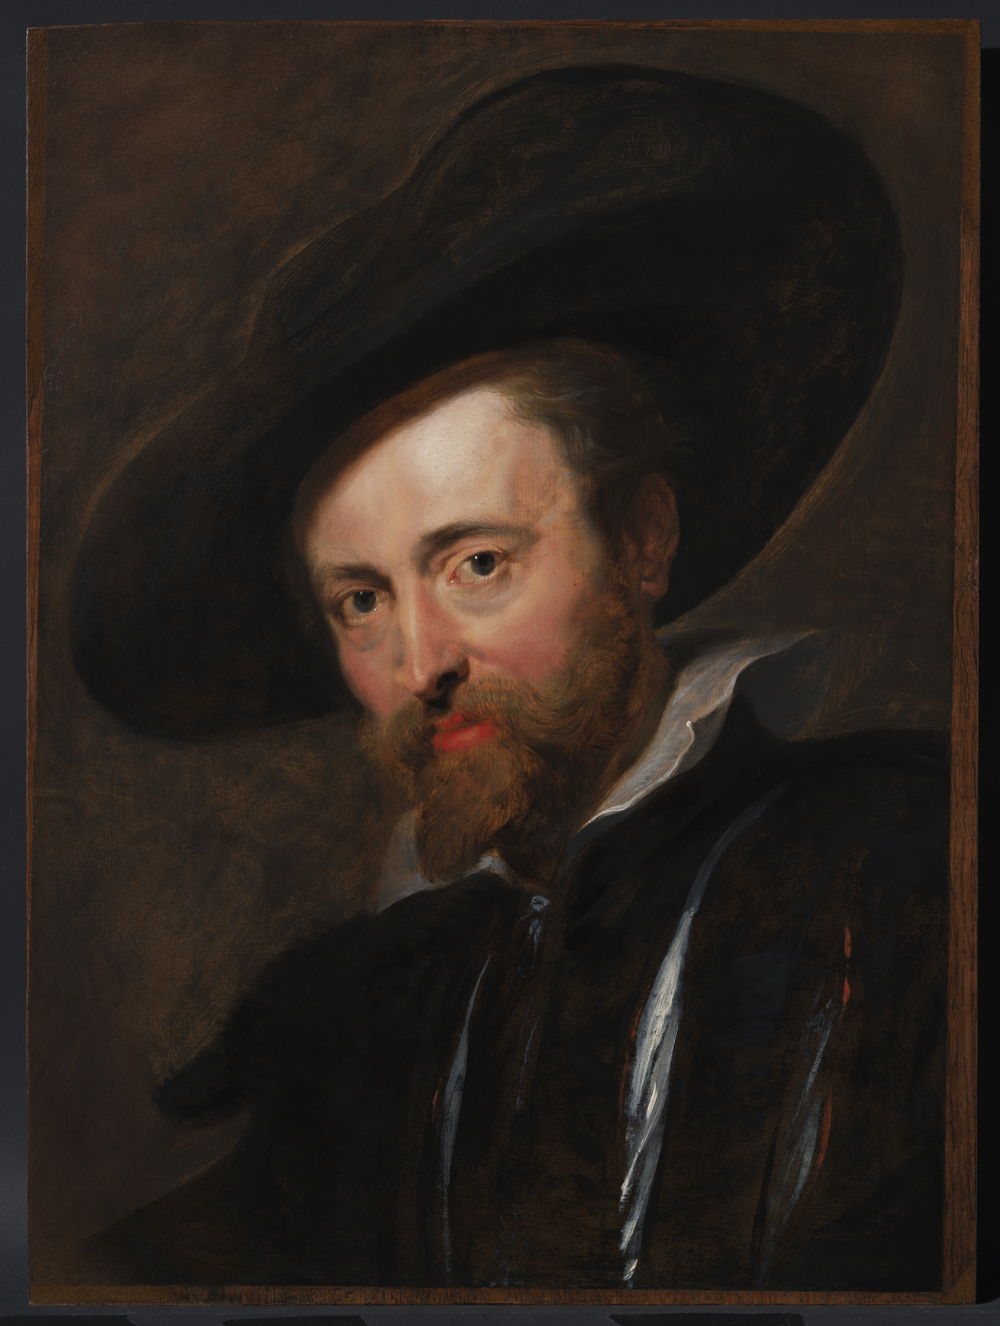 Peter Paul Rubens, Self-Portrait, after restoration by KIK-IRPA, 12th of April 2018, photo KIK-IRPA BRussel